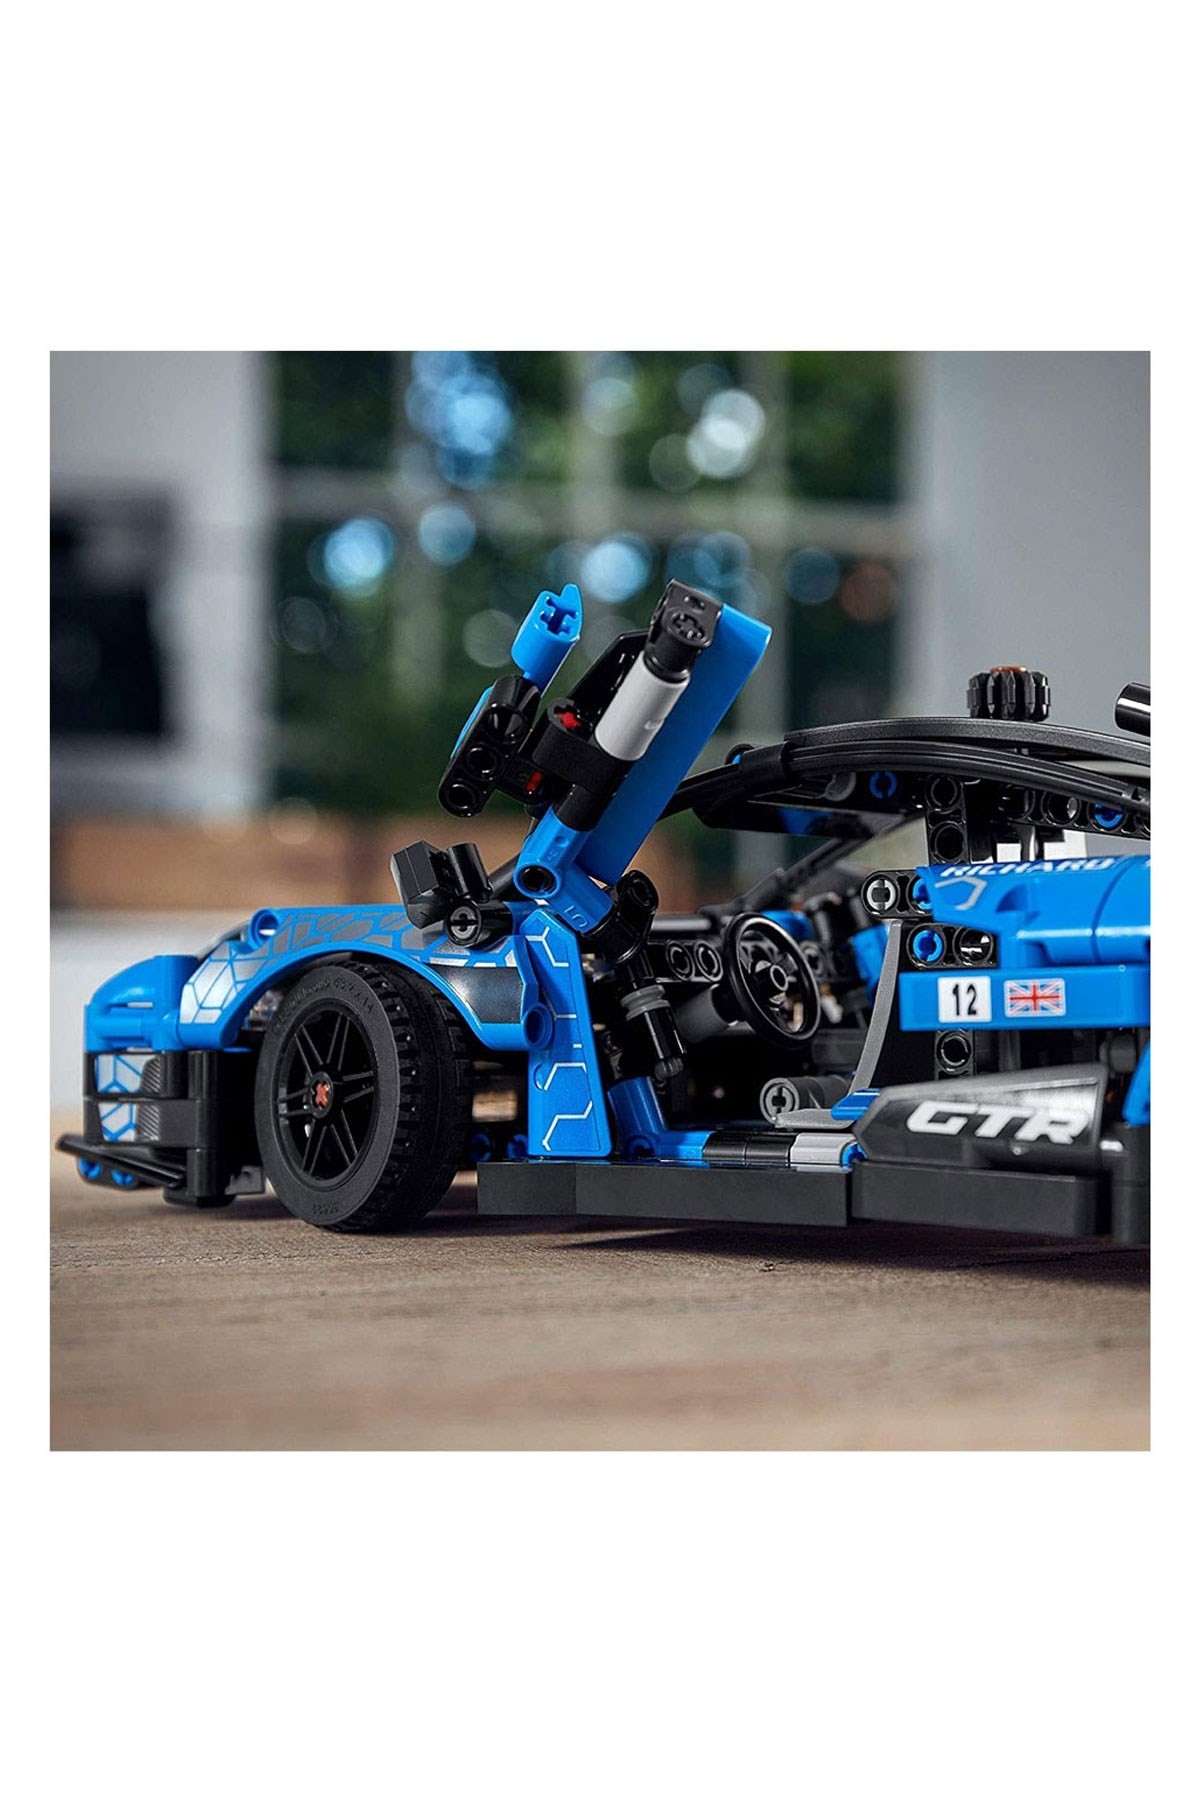 Lego Technic McLaren Senna GTR 42123